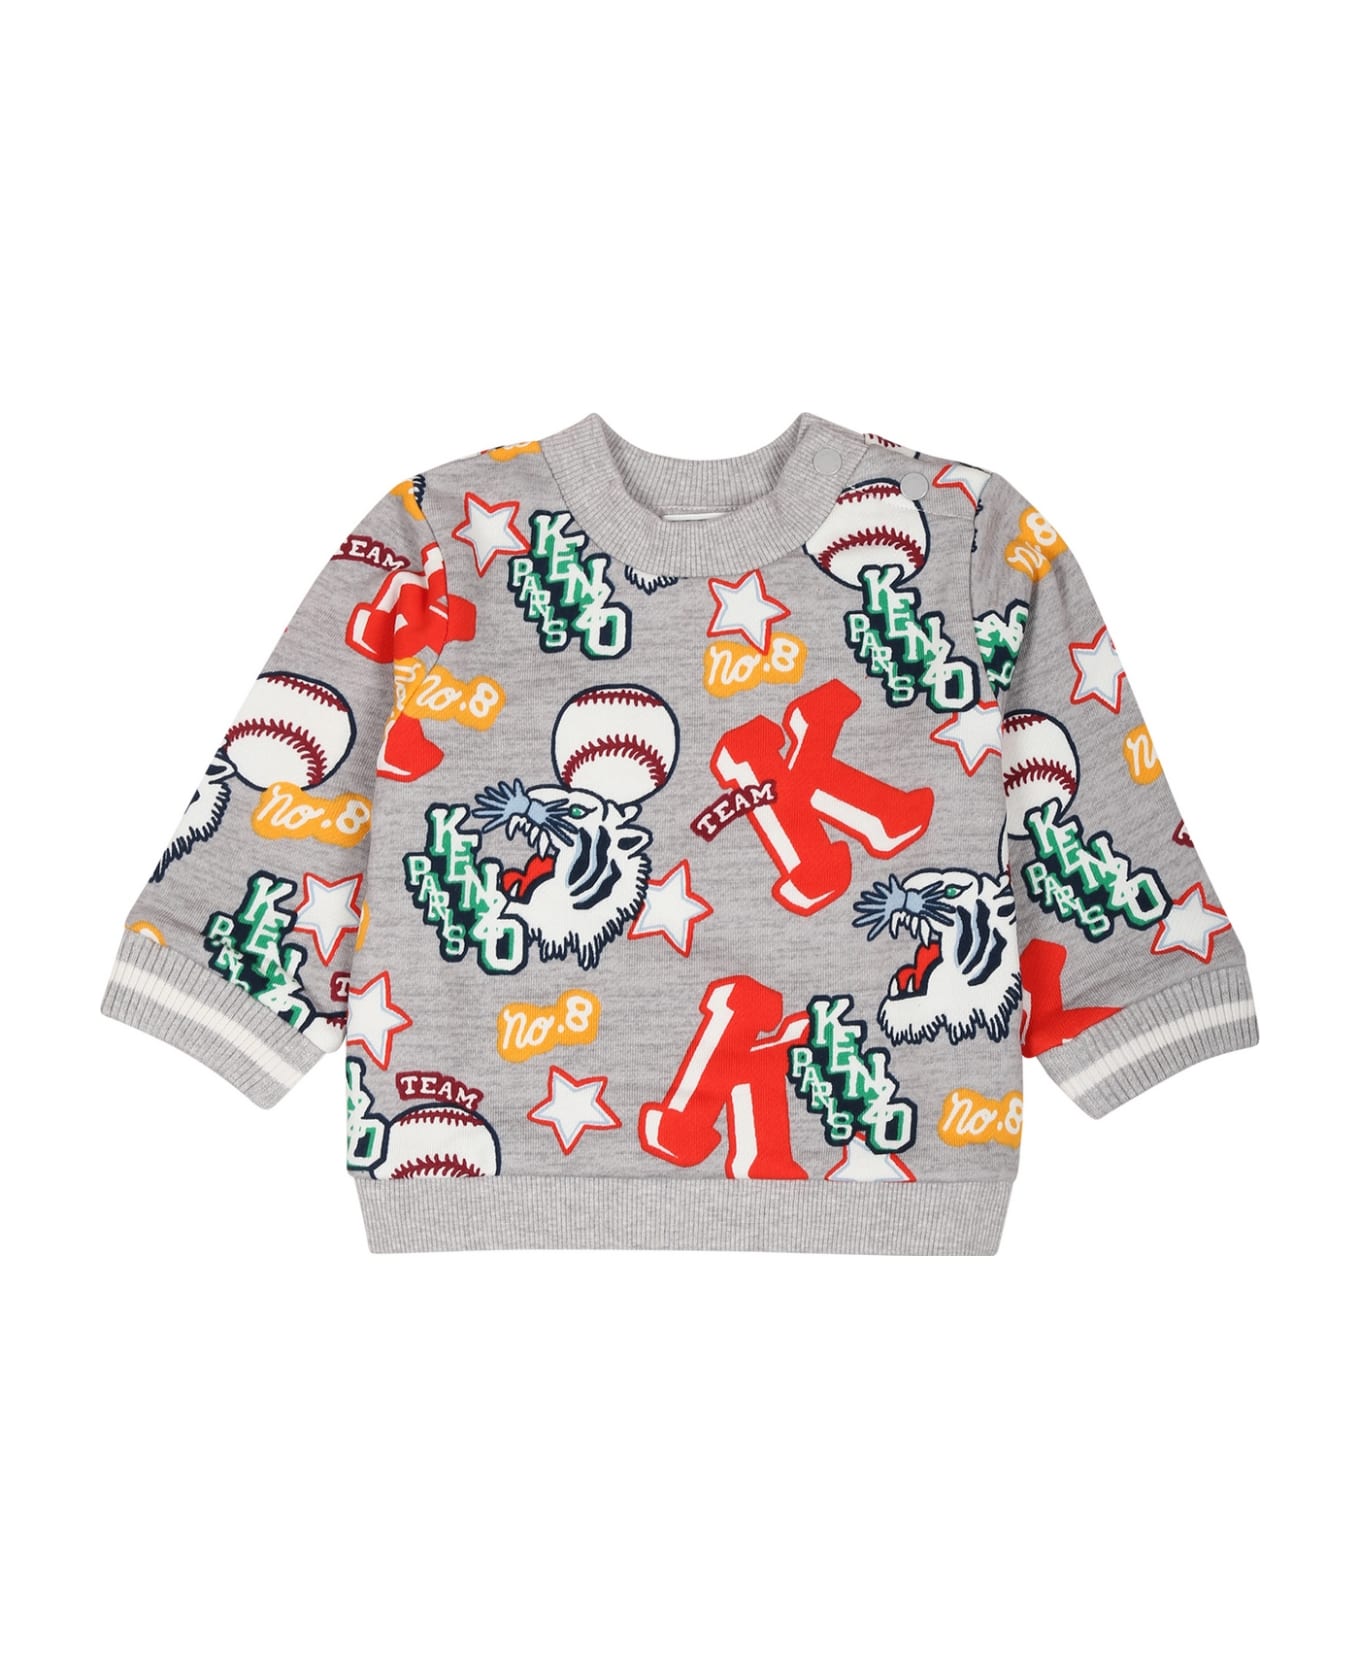 Kenzo Kids Grey Sweatshirt For Baby Boy With Tiger And Logo - Grey